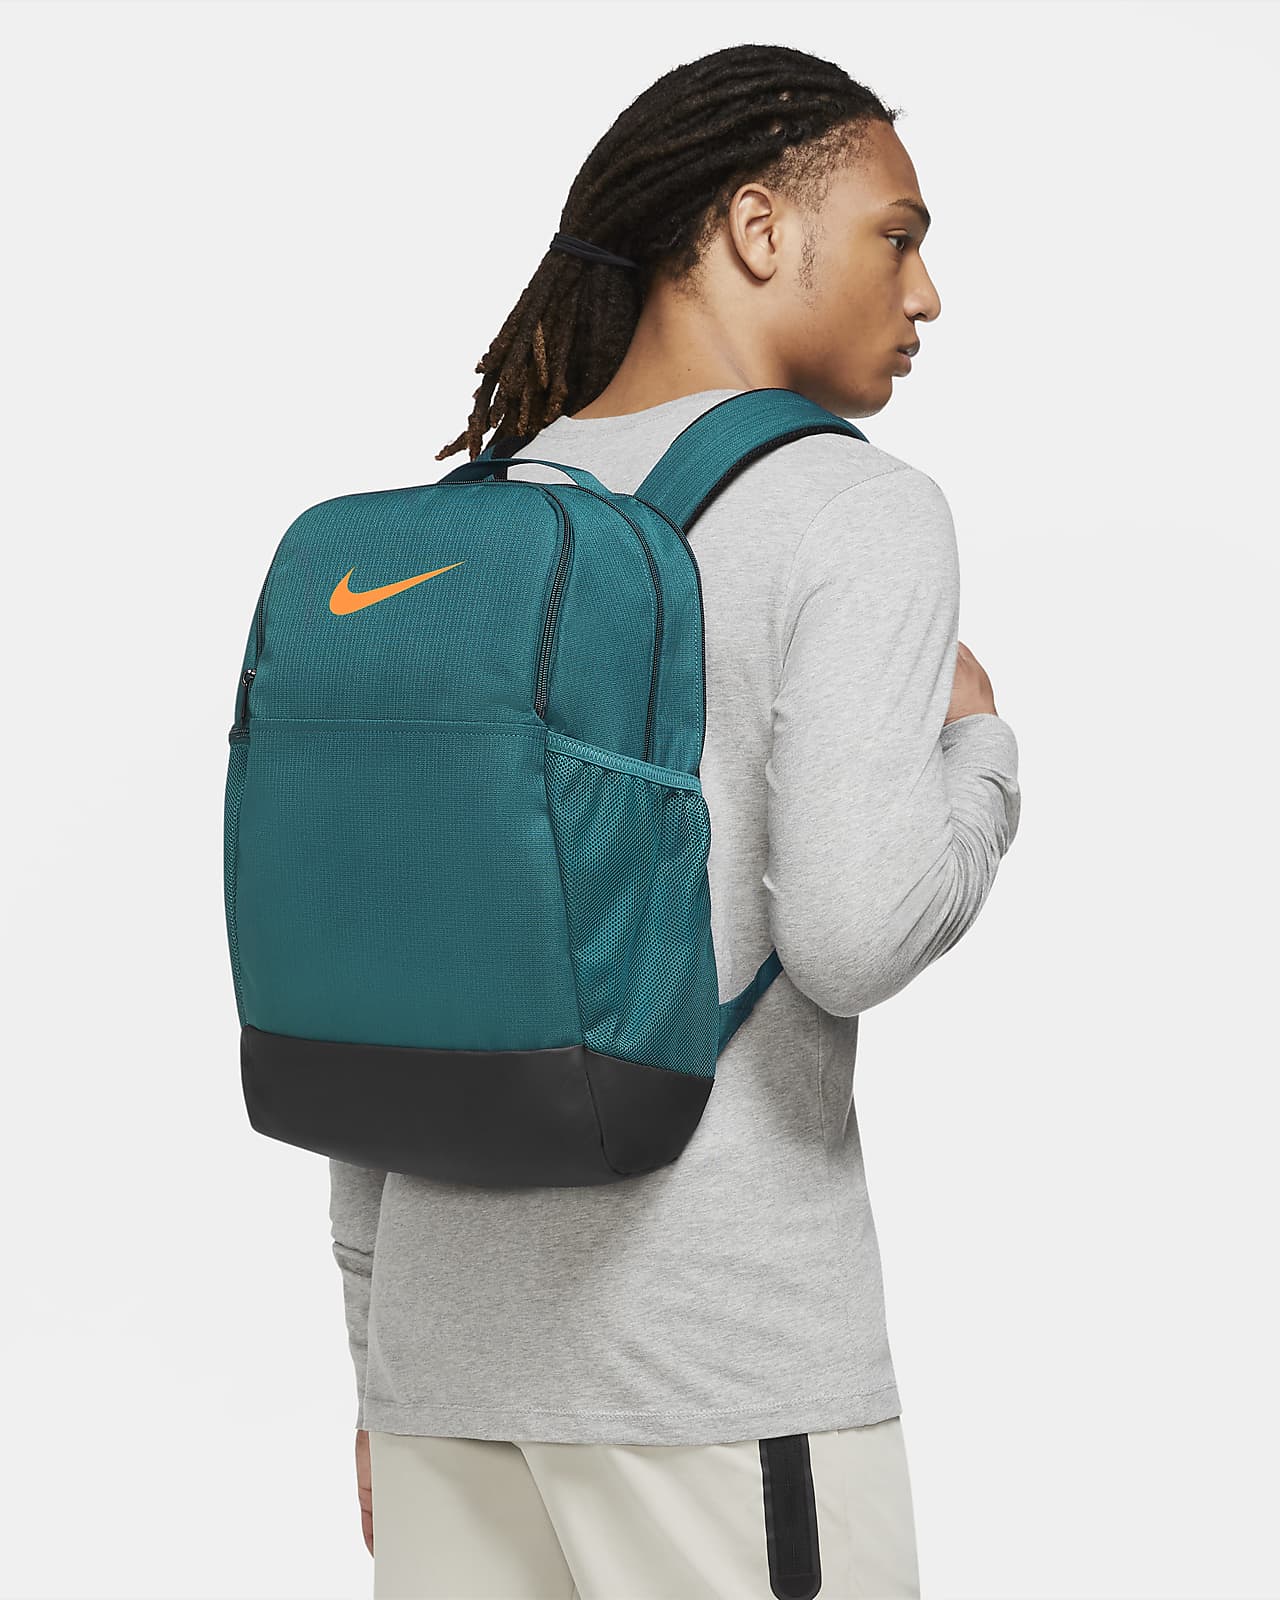 Nike Brasilia 9.0 Backpack Camo Printed Fits 15 Laptop mesh